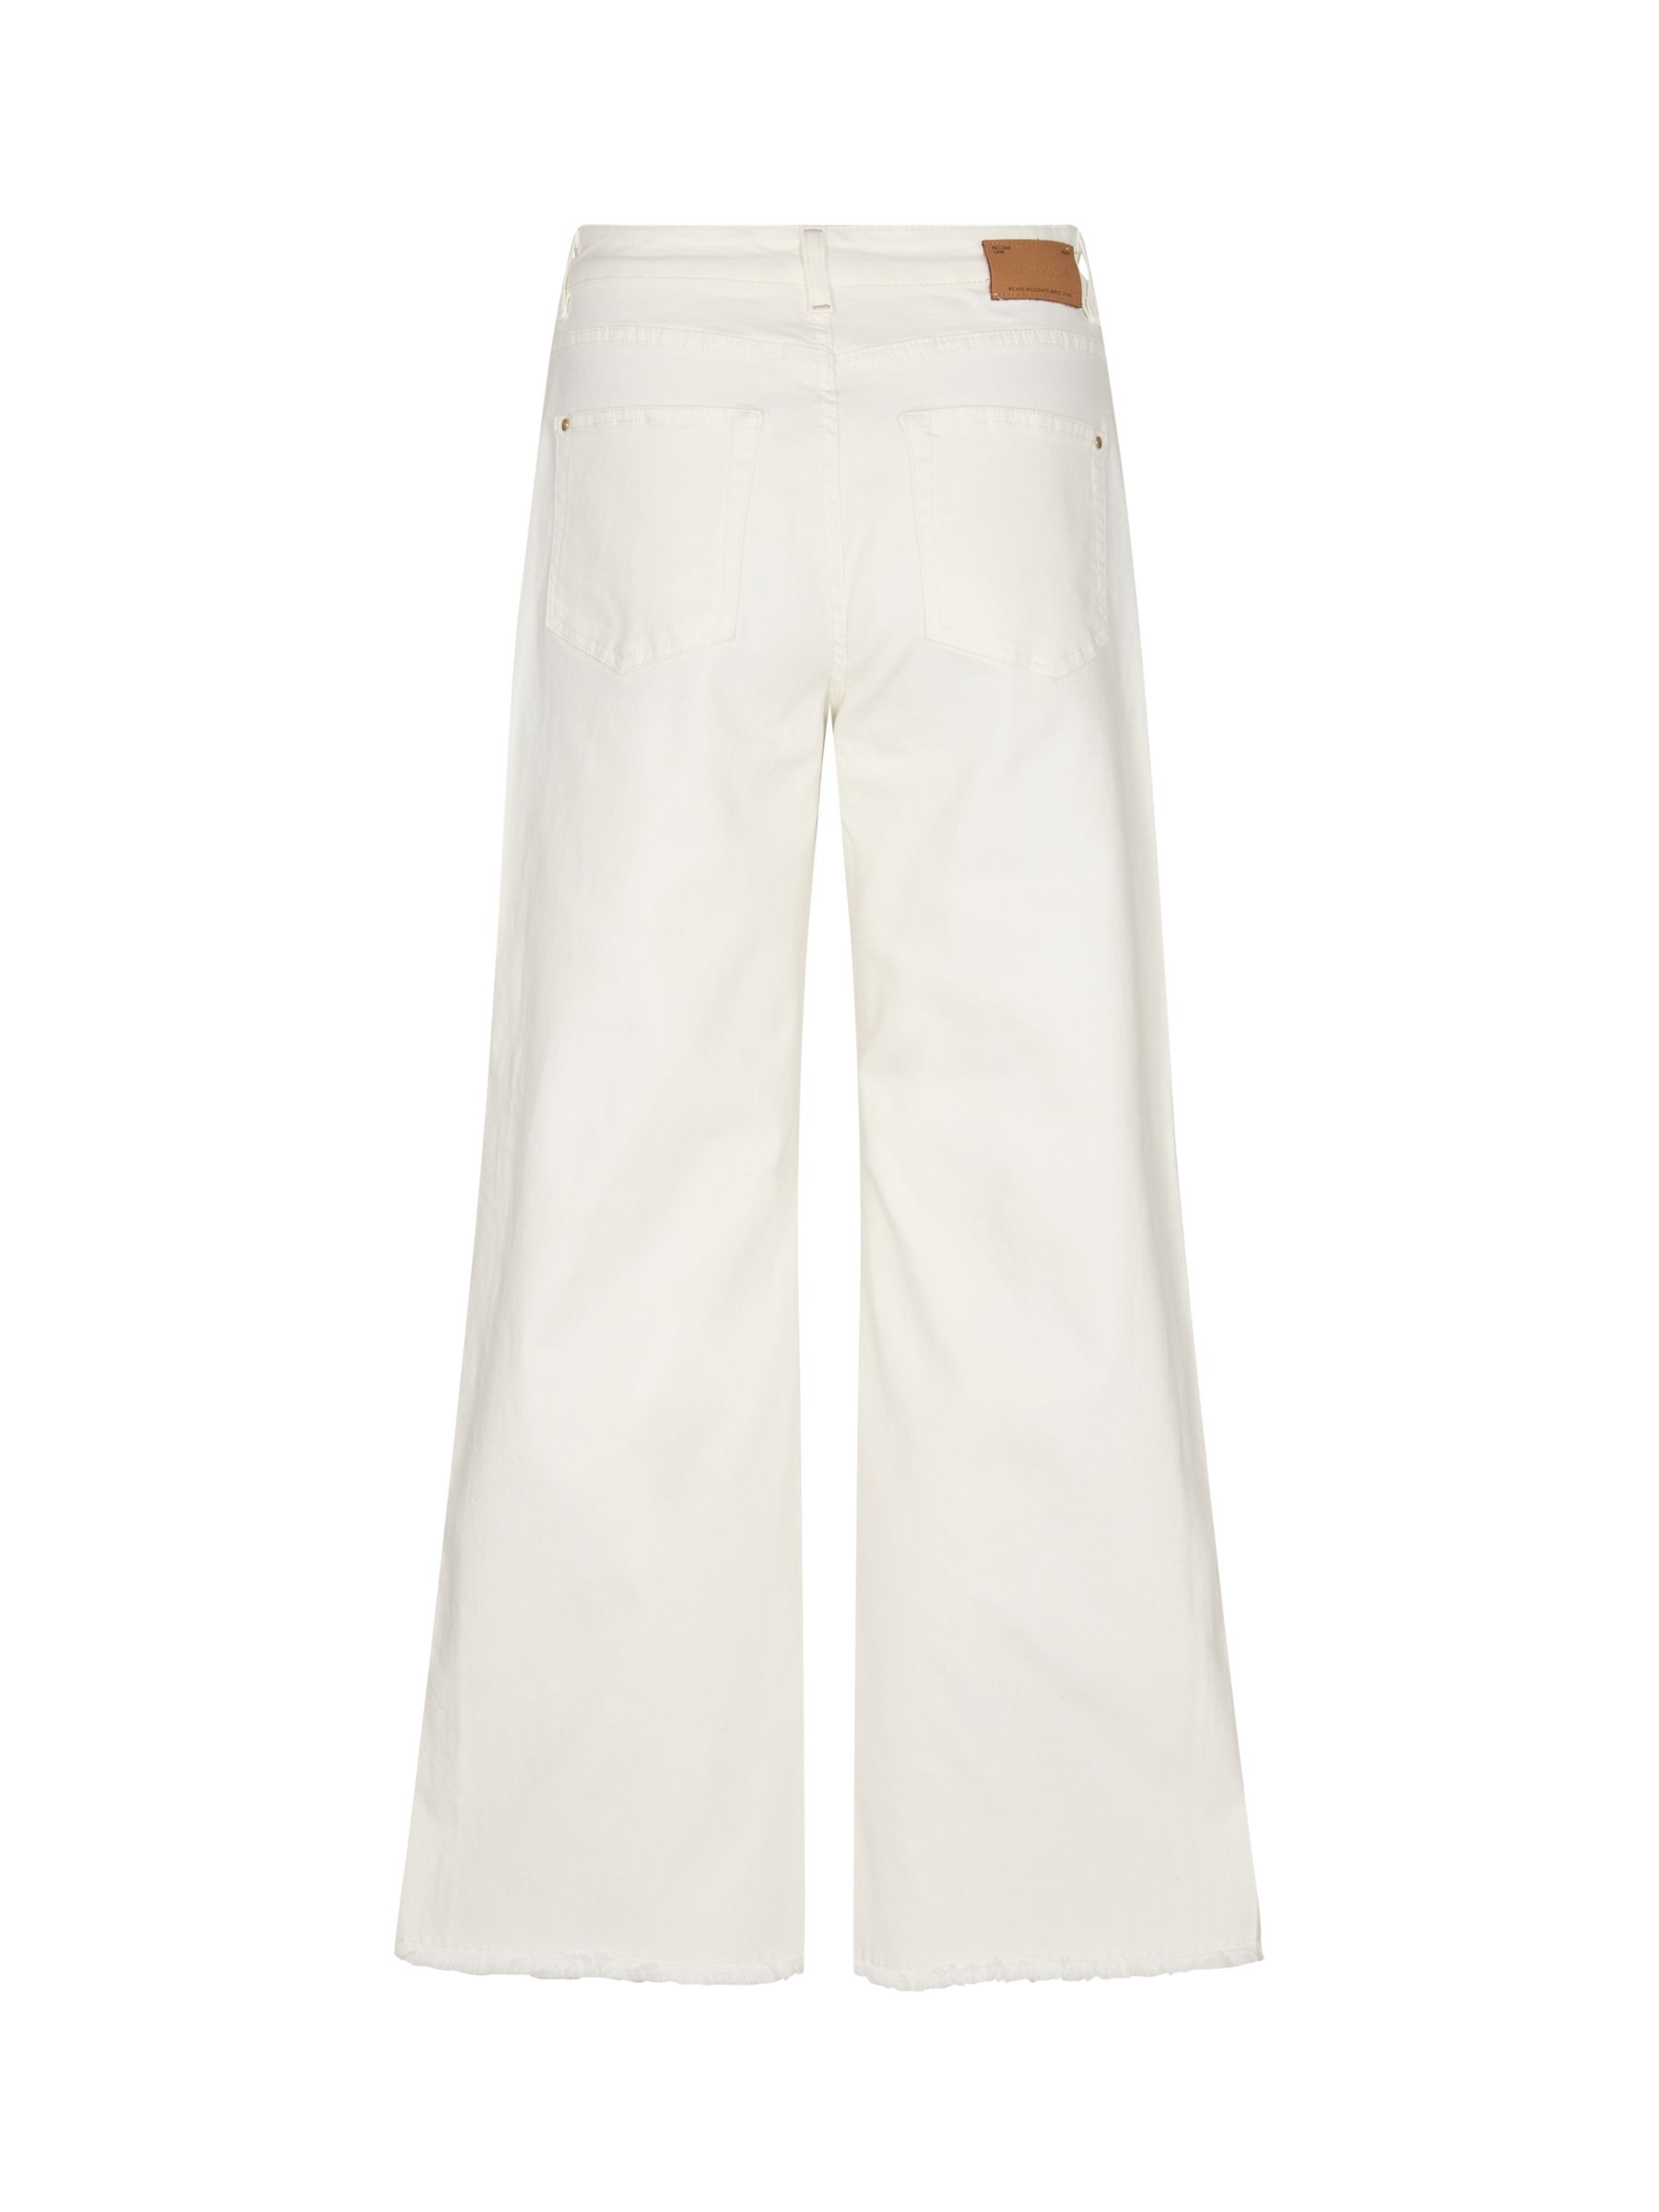 MOS MOSH Dara Kyle Wide Leg Raw Hem Jeans, Off White, 24R